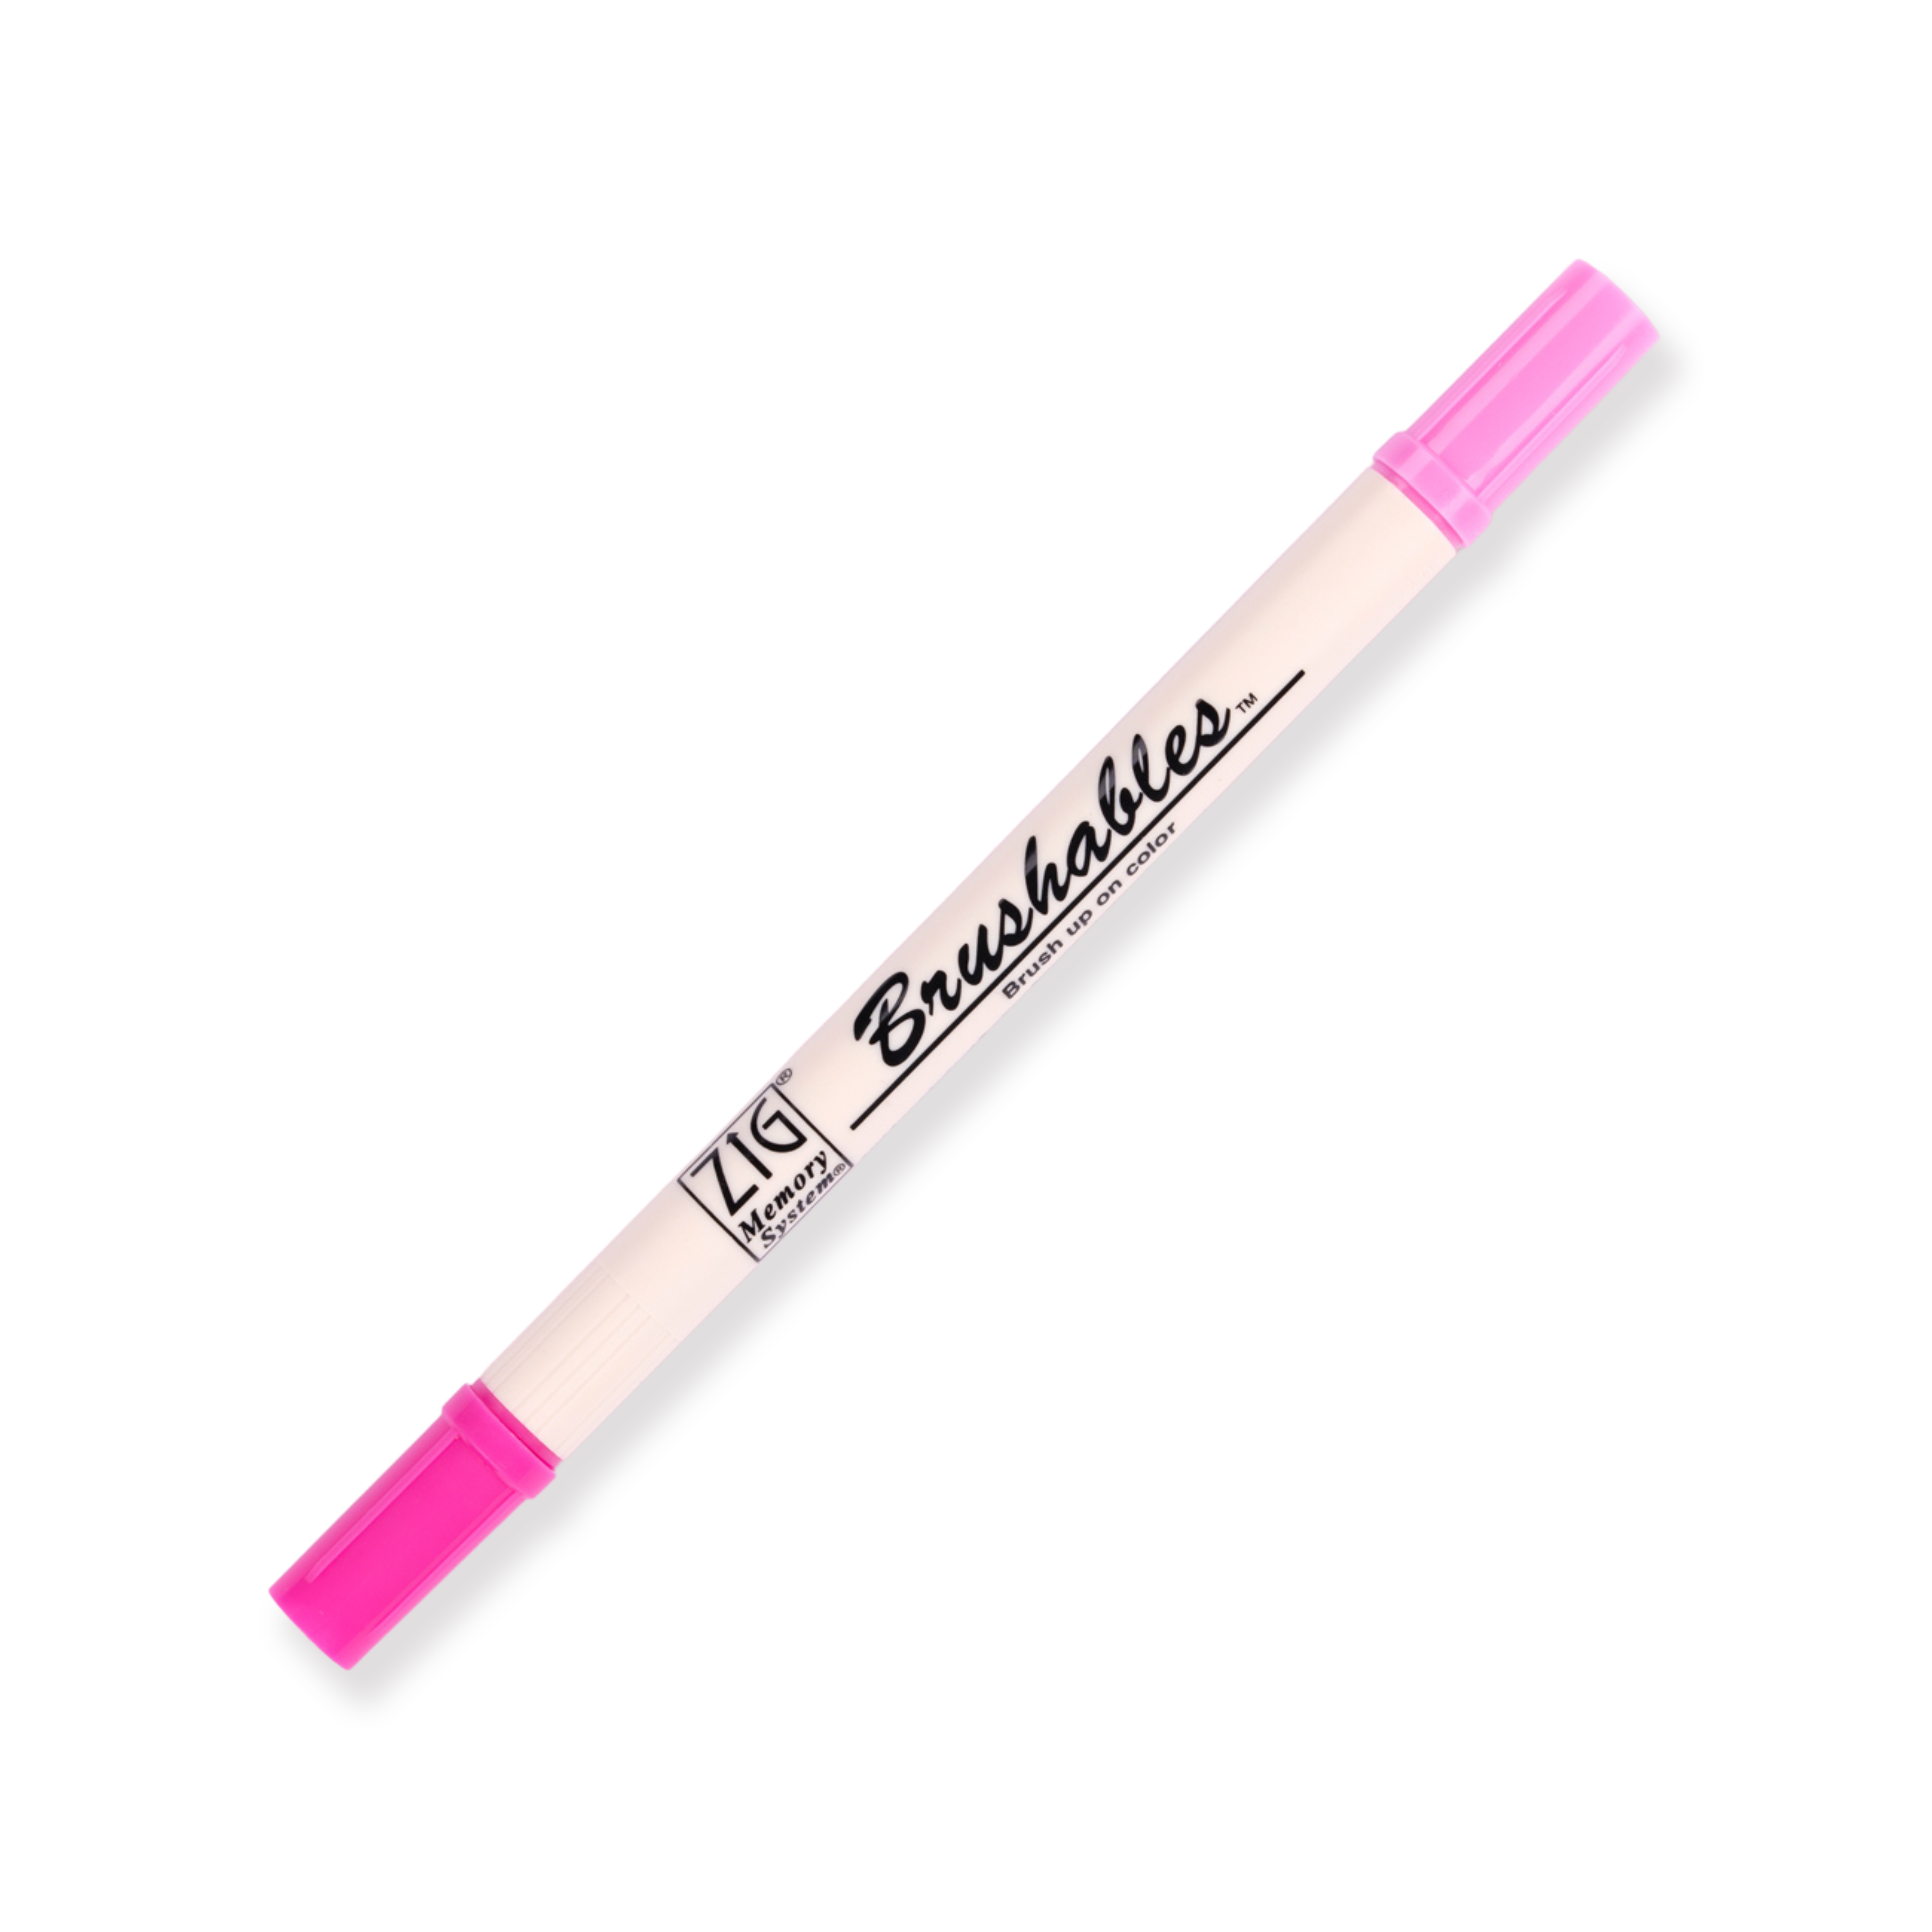 Kuretake Zig Brushables Brush Pen - Pure Pink 025